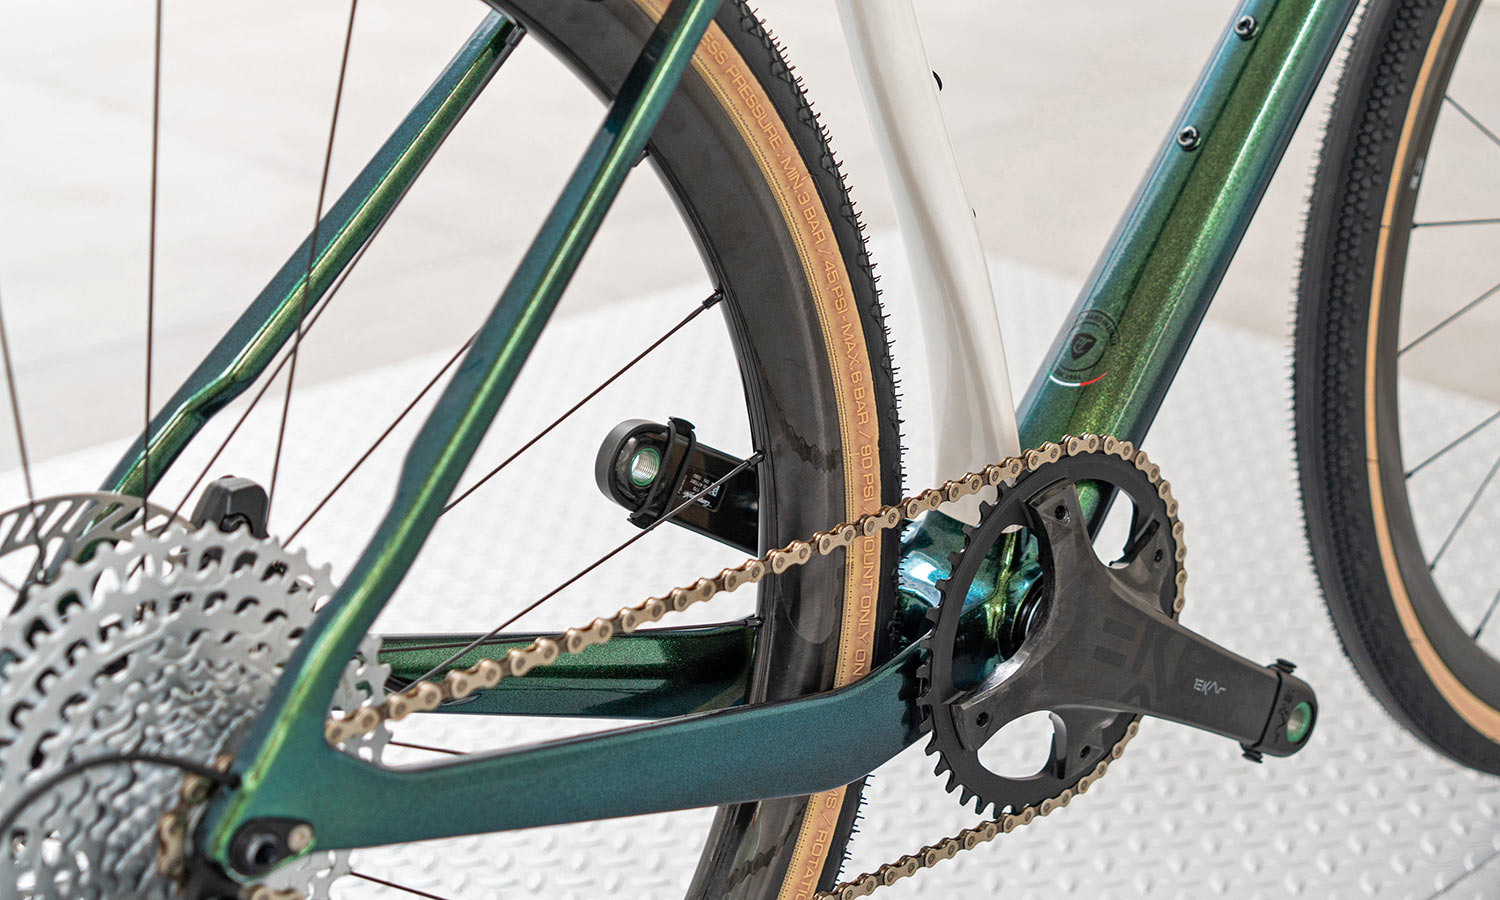 Titici Relli carbon gravel bike, Flexy PAT AAT vibration-damping engineered comfort flex, chainstay